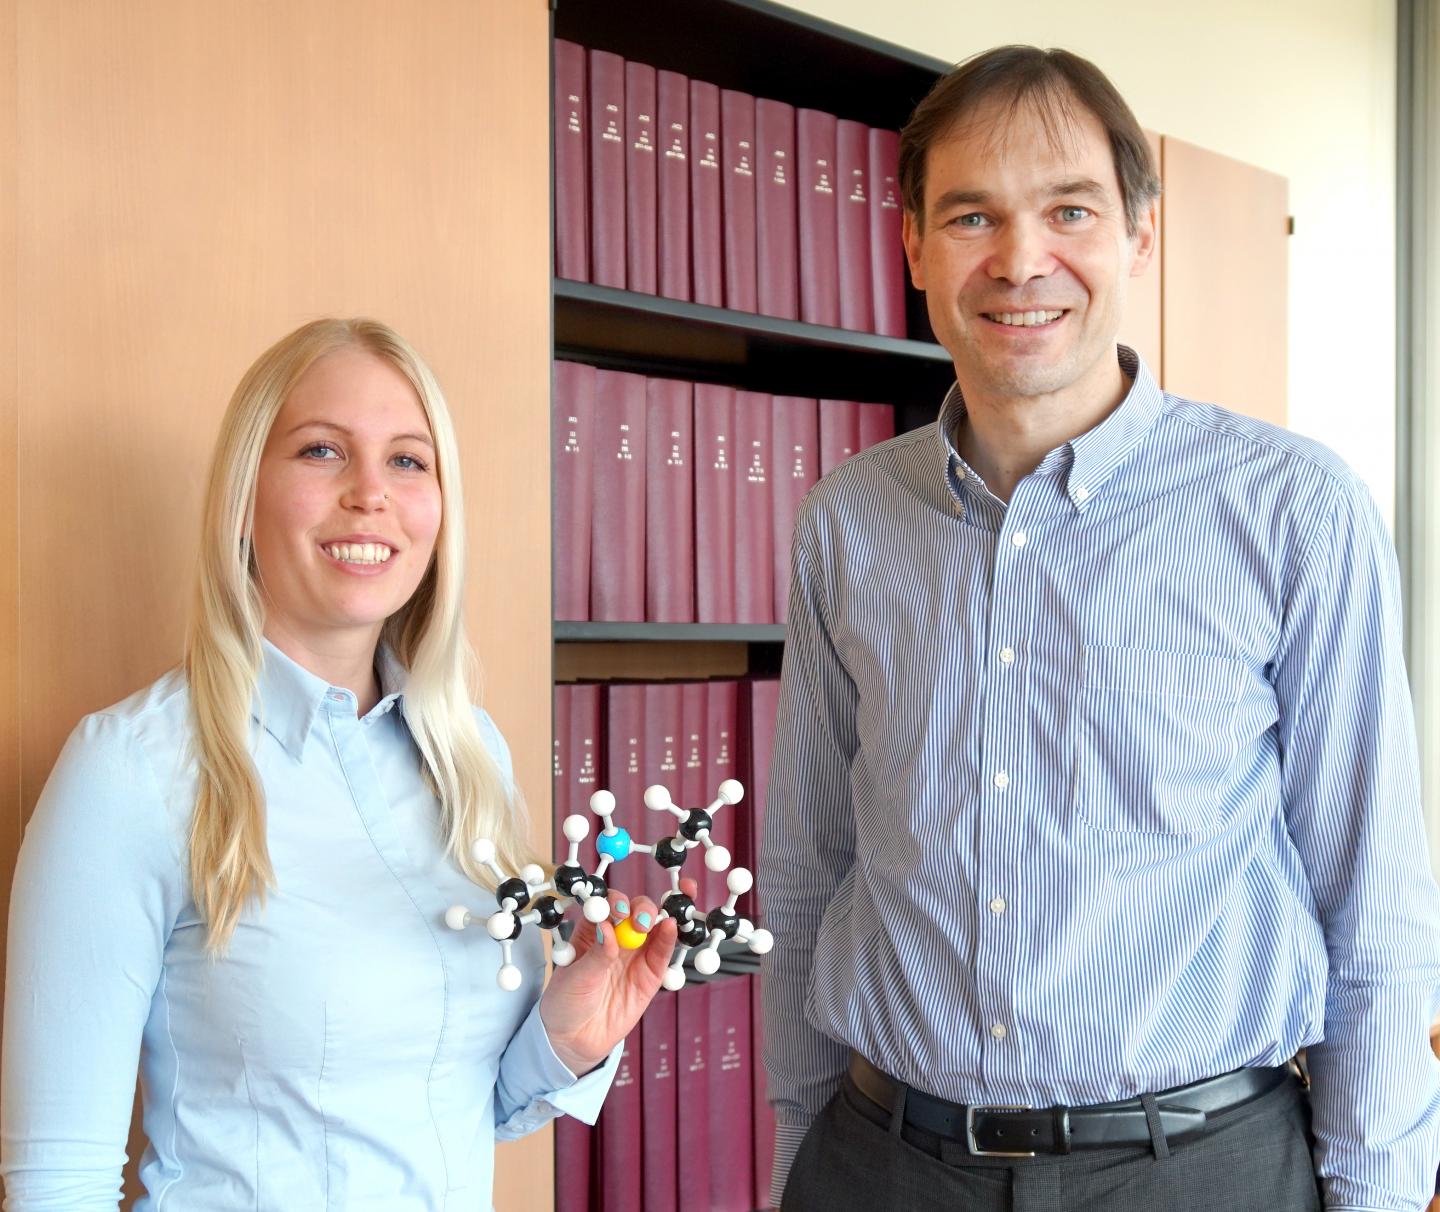 Nadine Zumbraegel and Harald Groeger, Bielefeld University